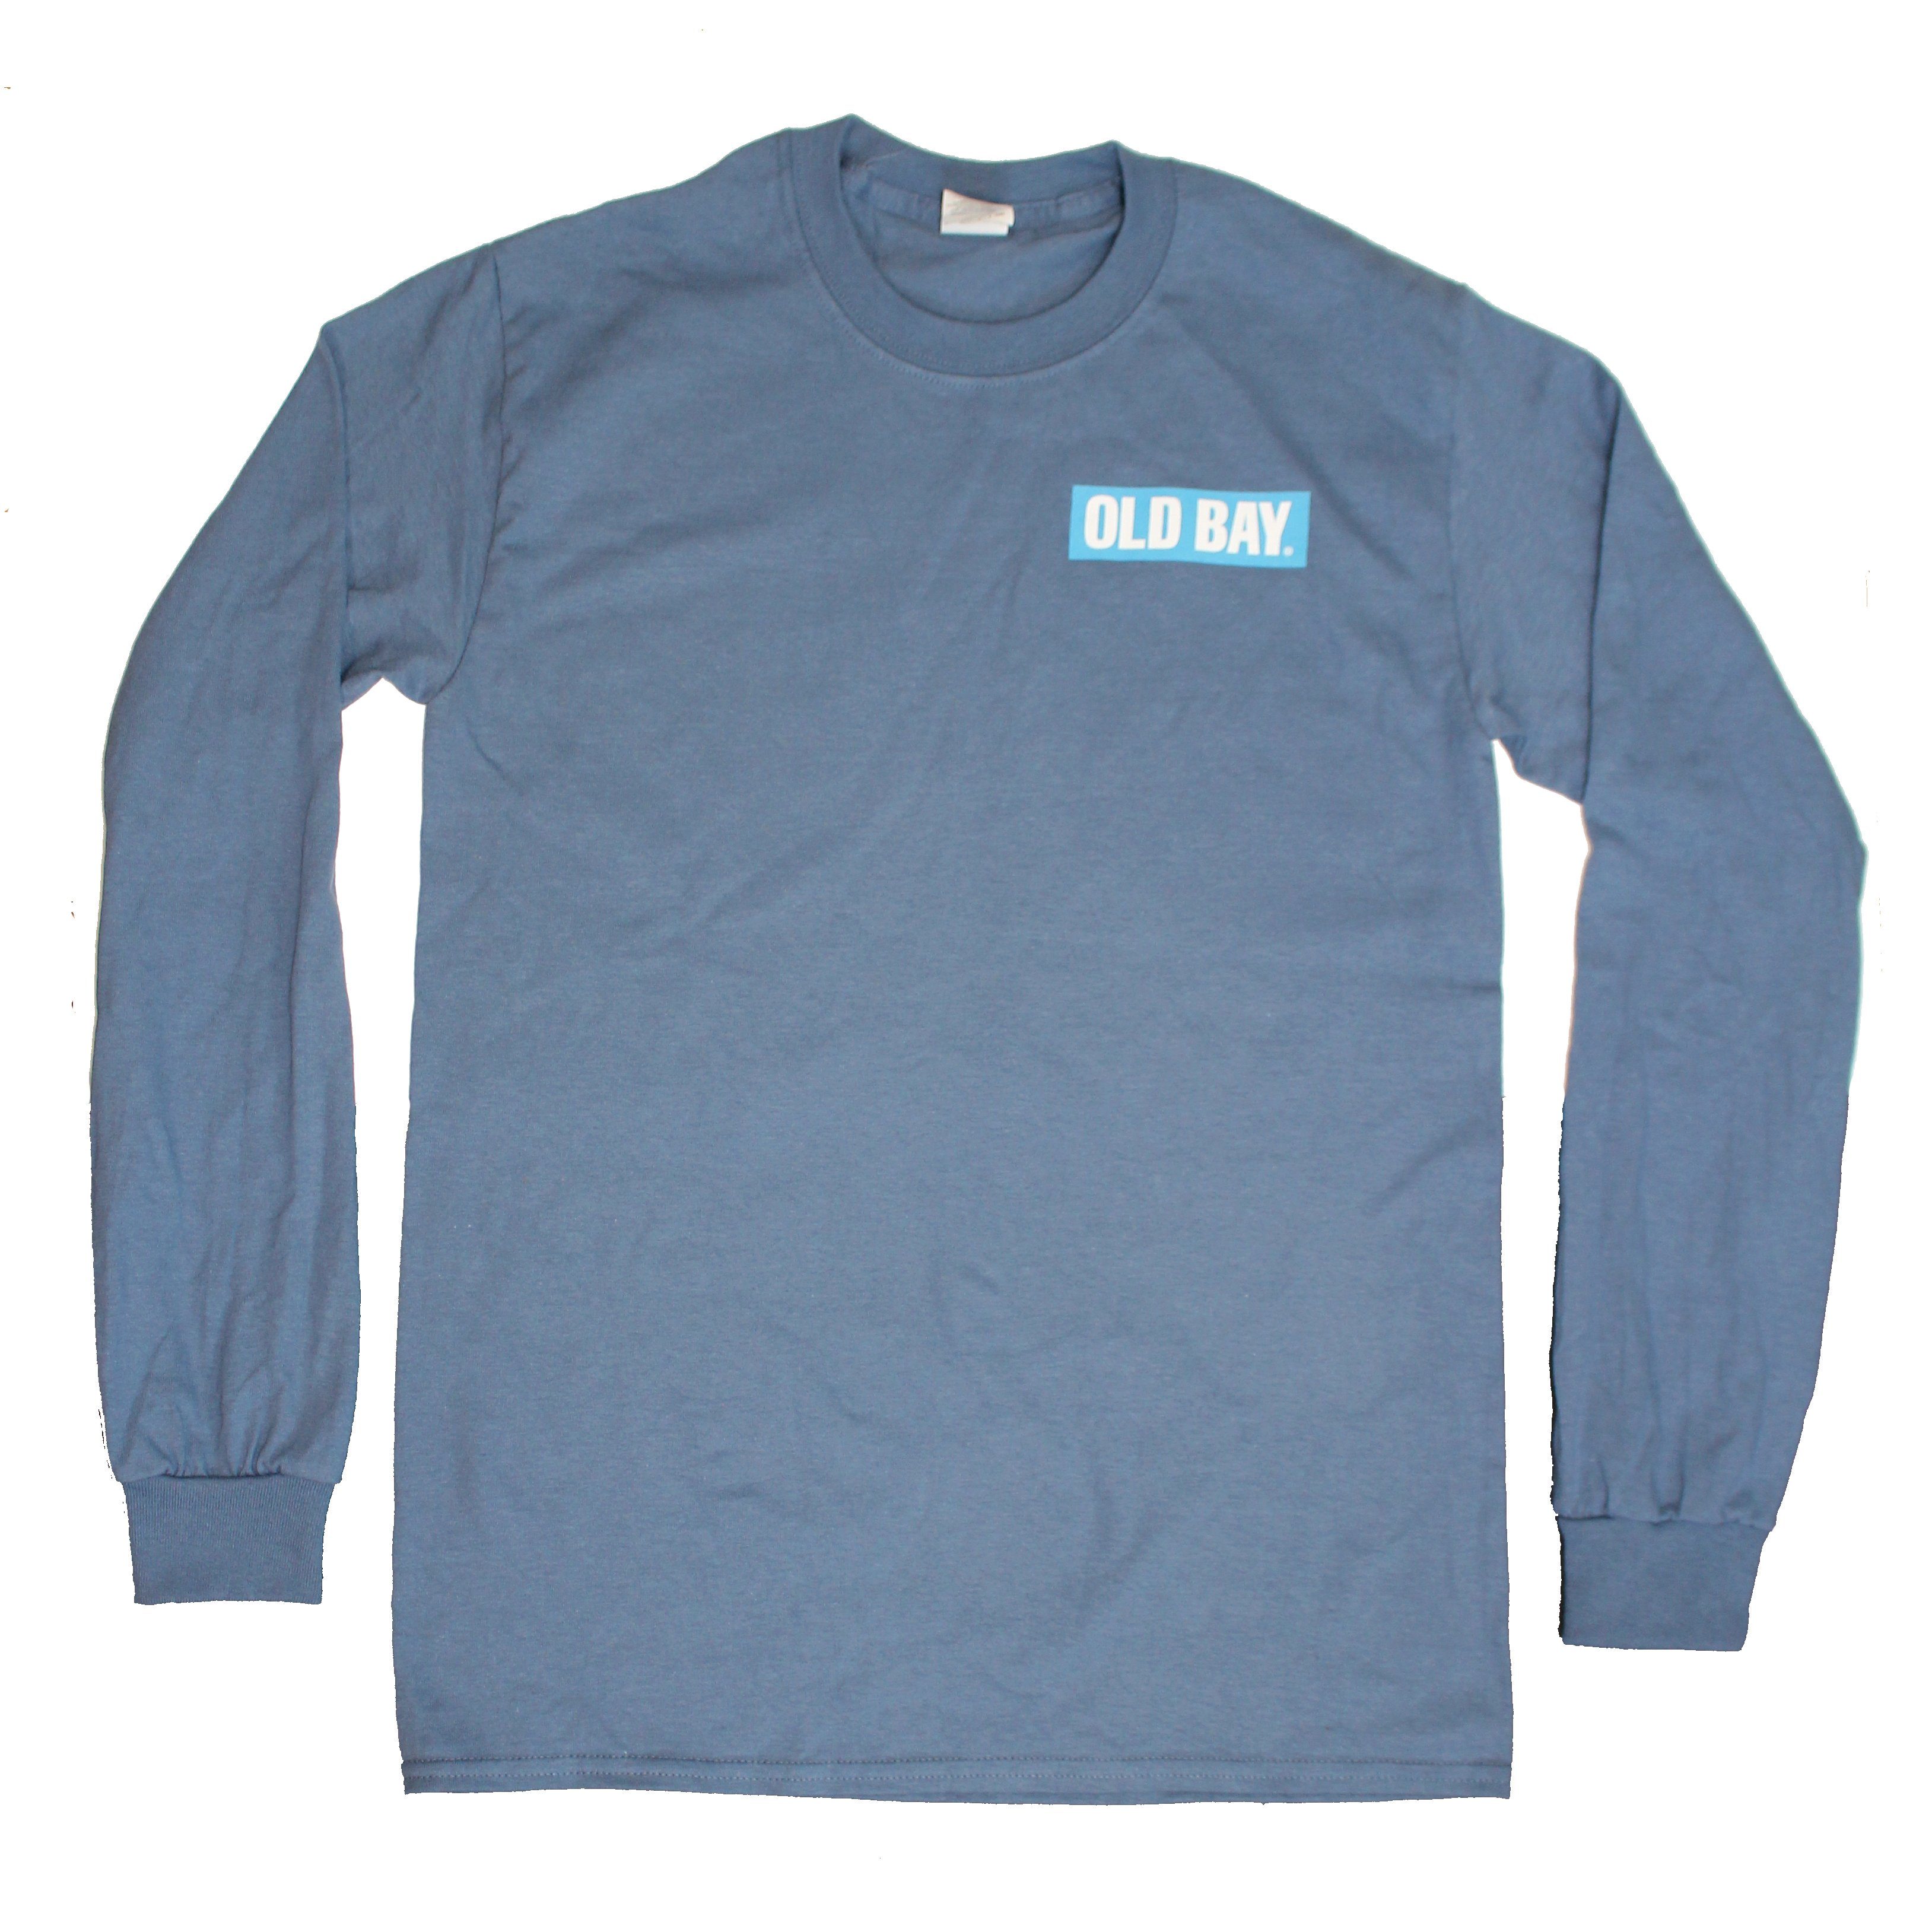 Crabaritaville - Old Bay, USA (Indigo Blue) / Long Sleeve Shirt - Route One Apparel